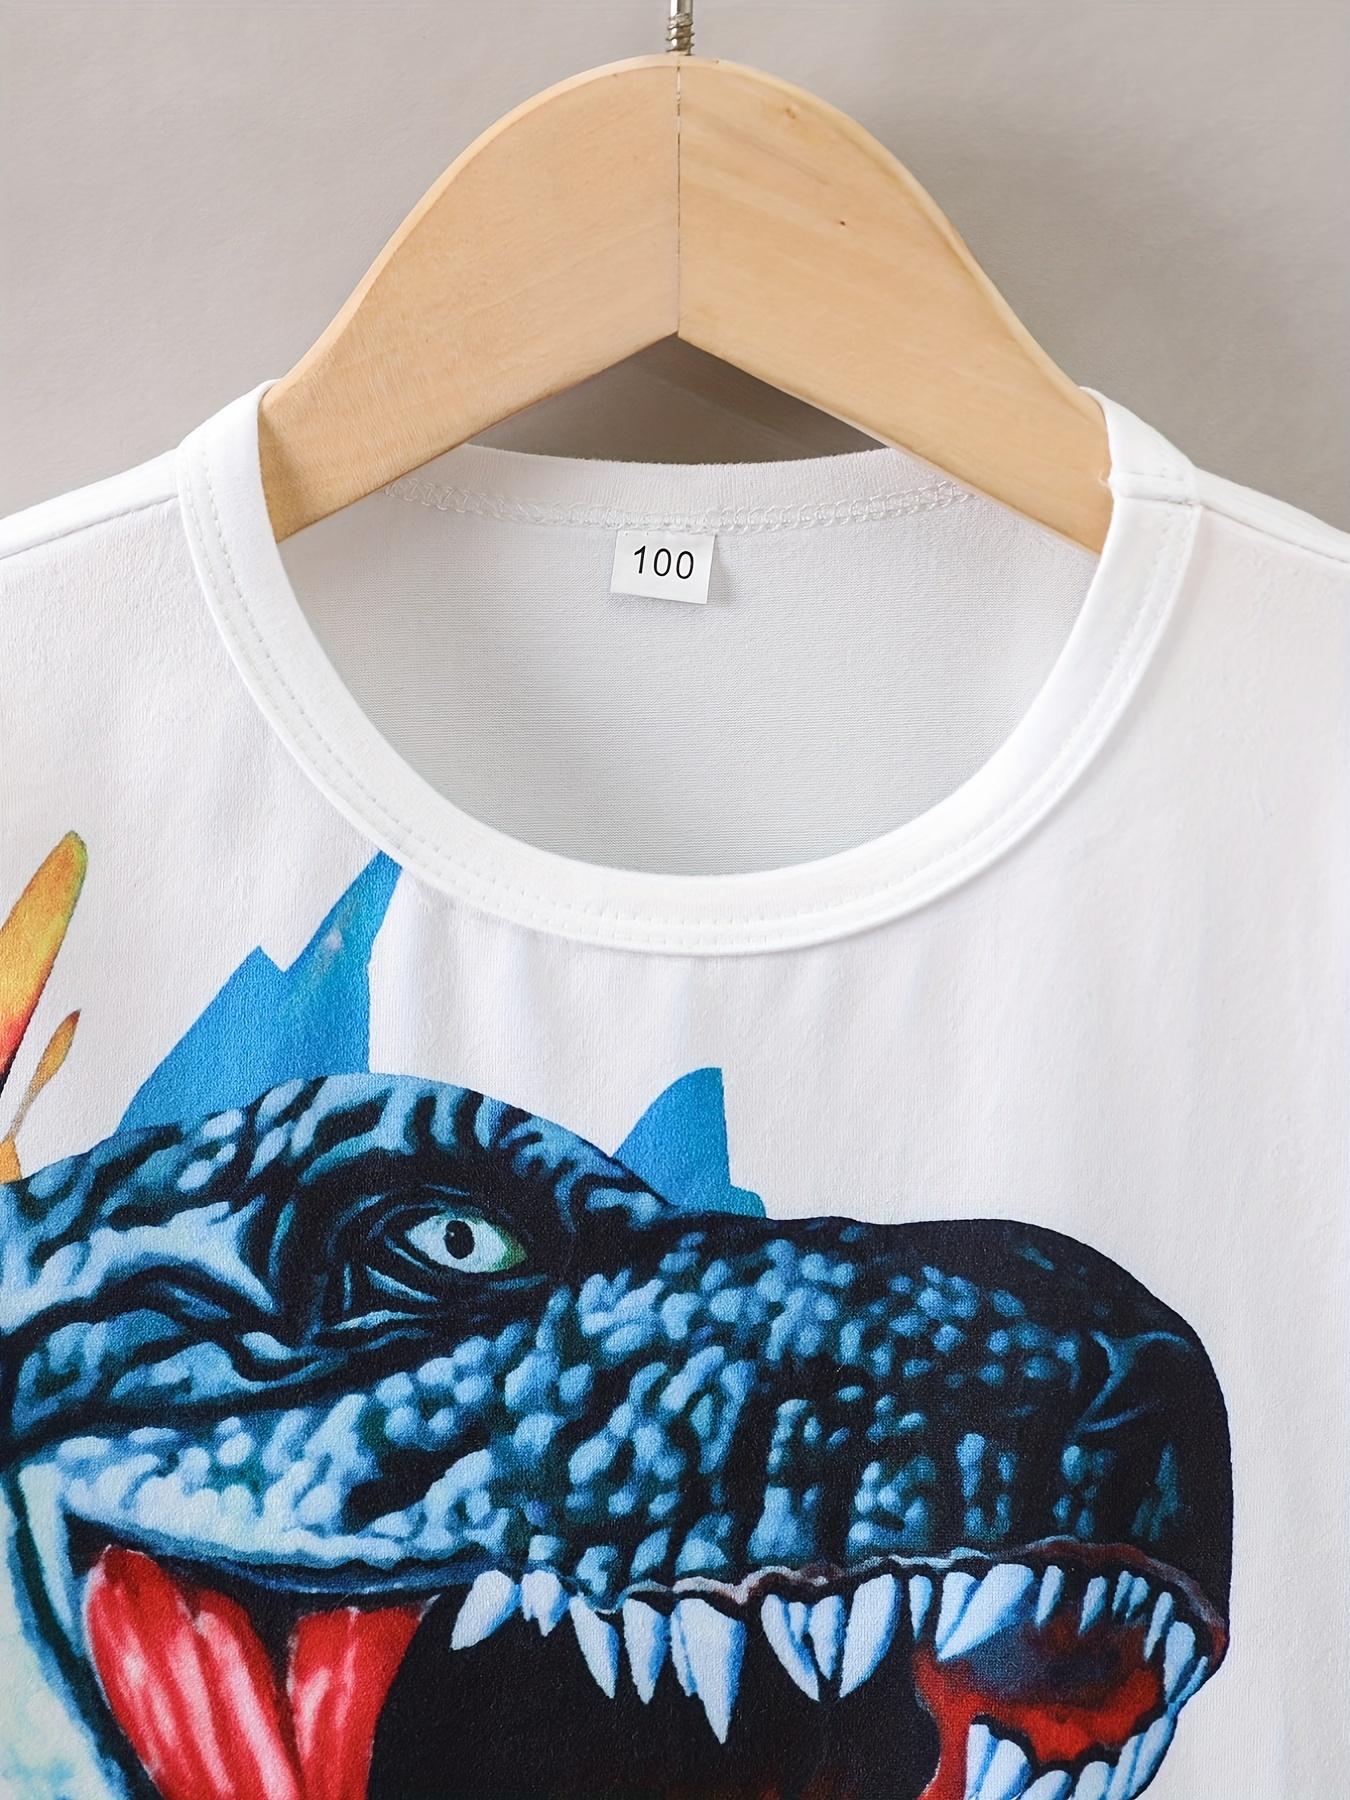 National Geographic Boys Tan Short Sleeved Dinosaur Tee Shirt T-Shirt 8 